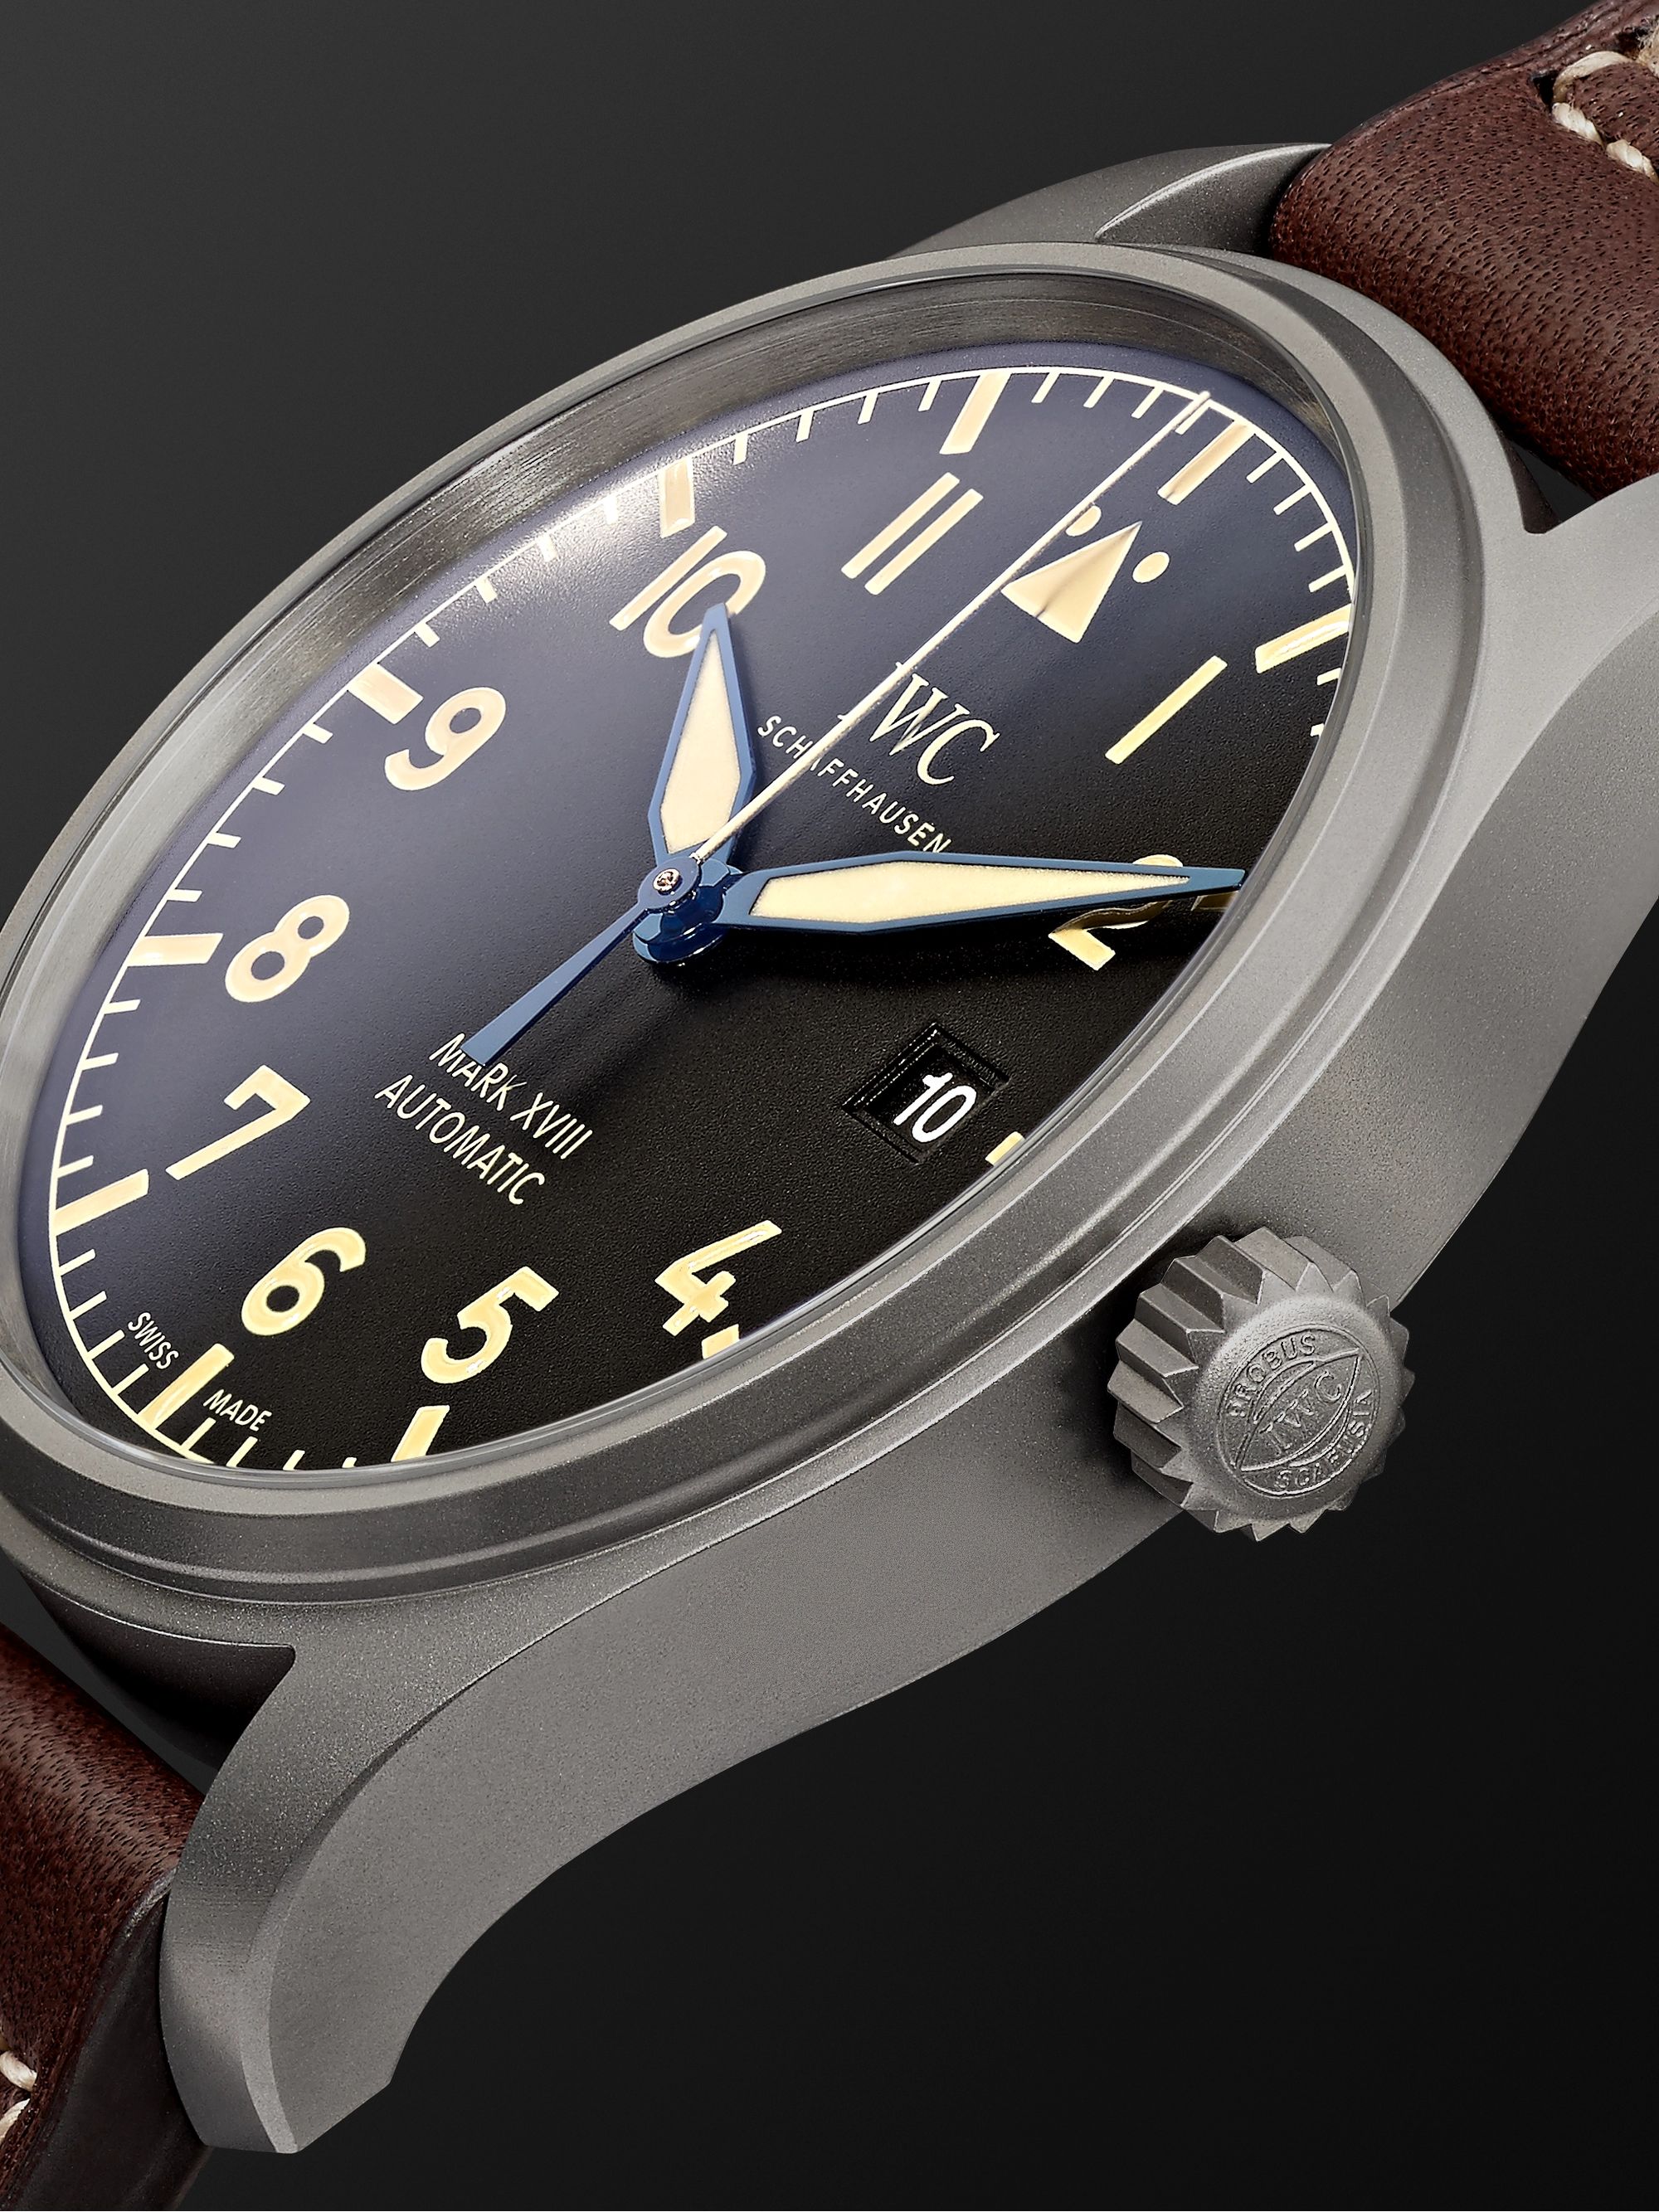 IWC SCHAFFHAUSEN Pilot's Mark XVIII Heritage Automatic 40mm Titanium and Leather Watch, Ref. No. IW327006